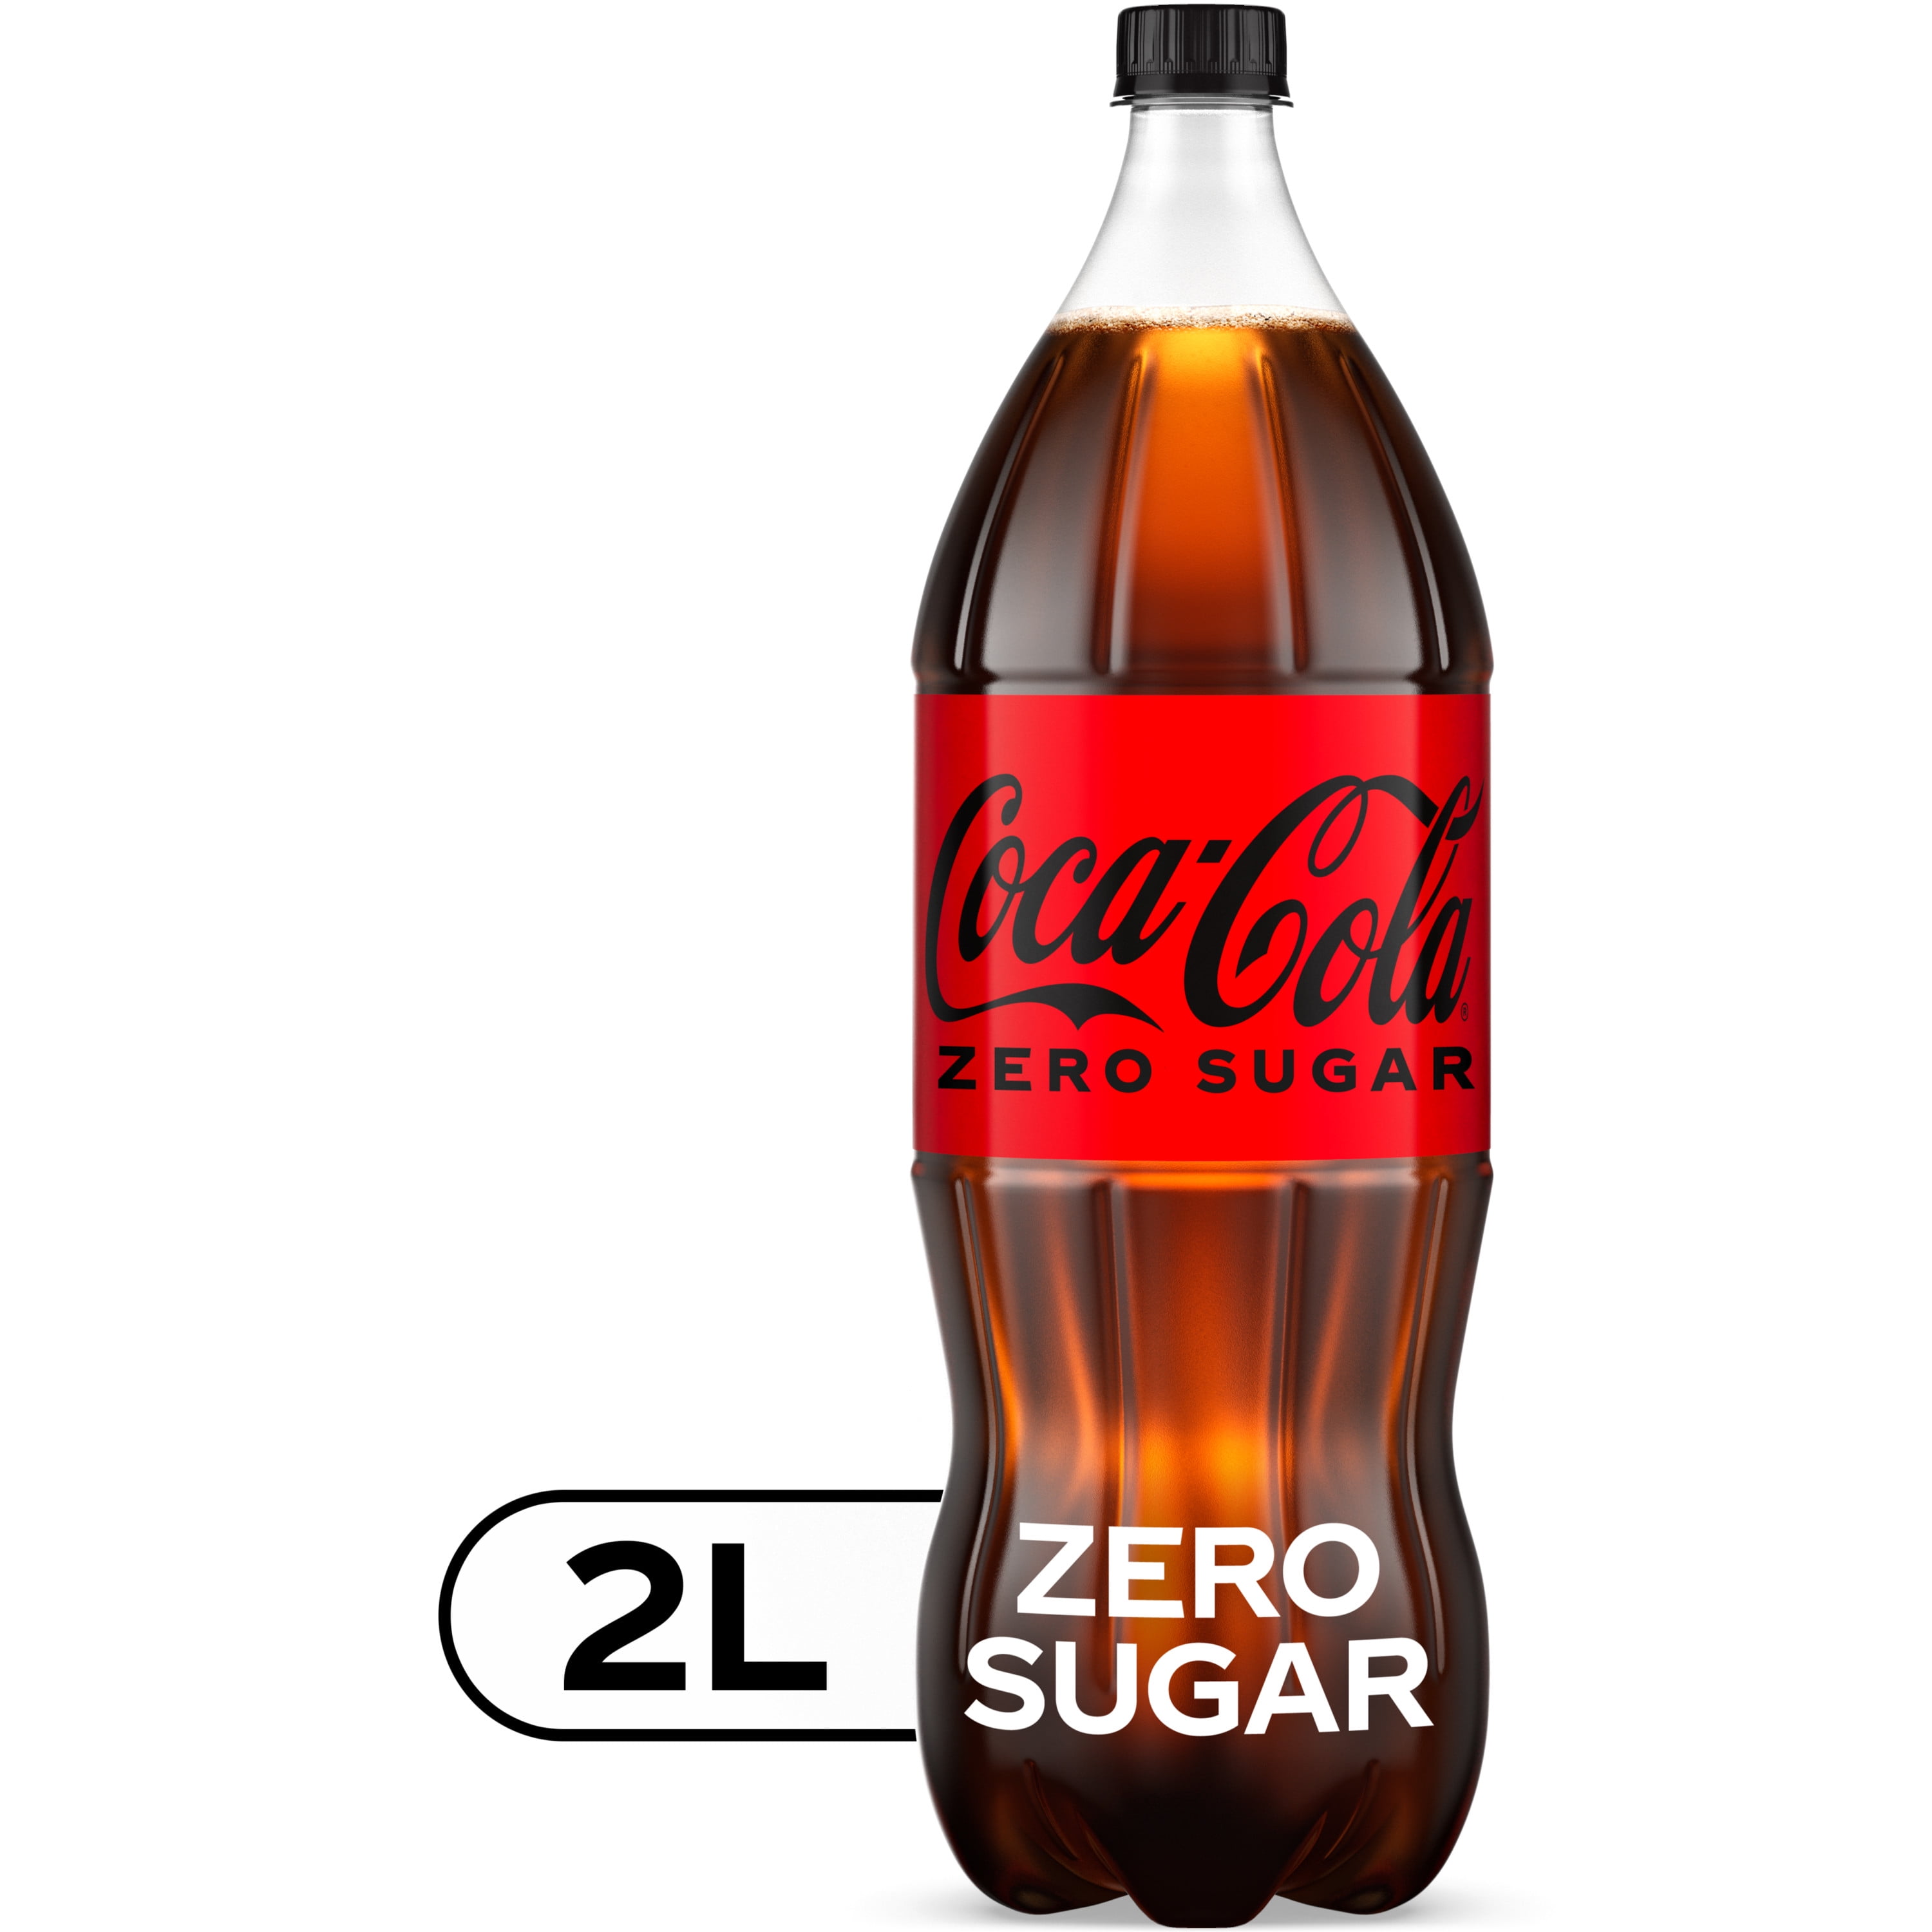 Coca-Cola Soda Pop, 2 Liter Bottle 